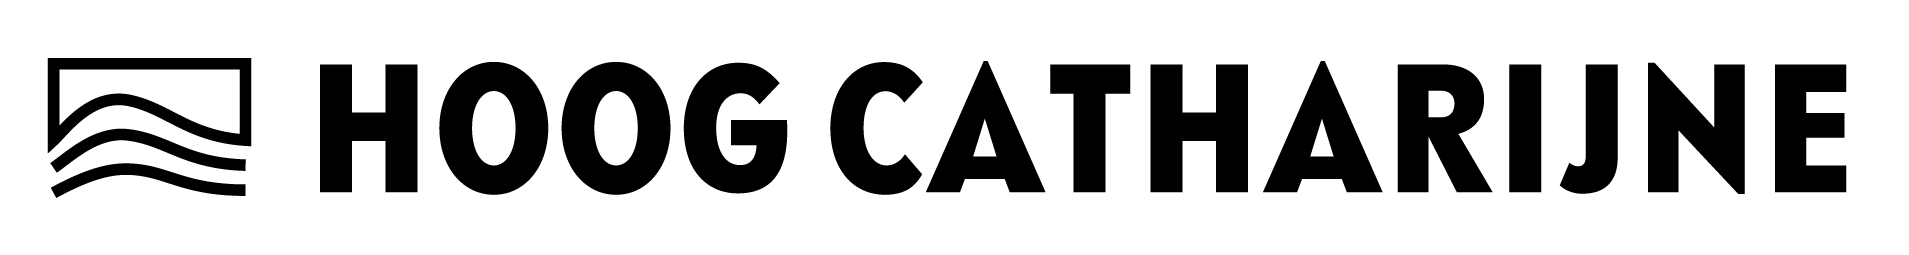 Logo Hoog Catharijne The Mall